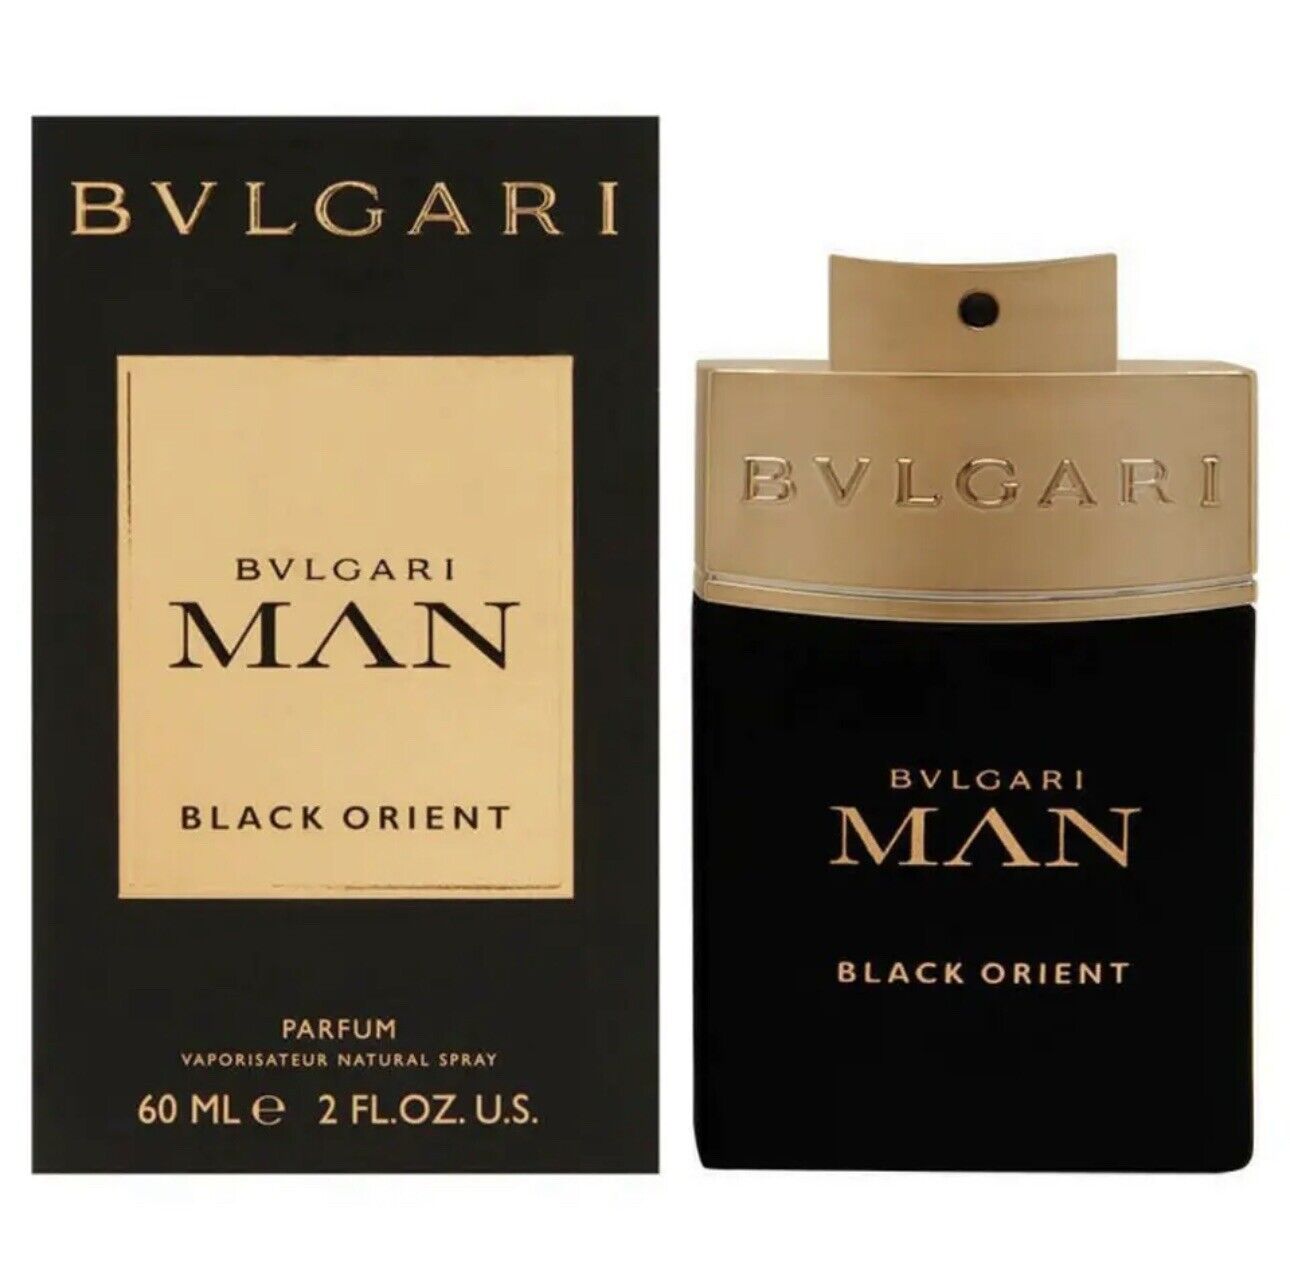 Bvlgari Man Black Orient Parfum Natural Spray 60ml Discontinued Rare